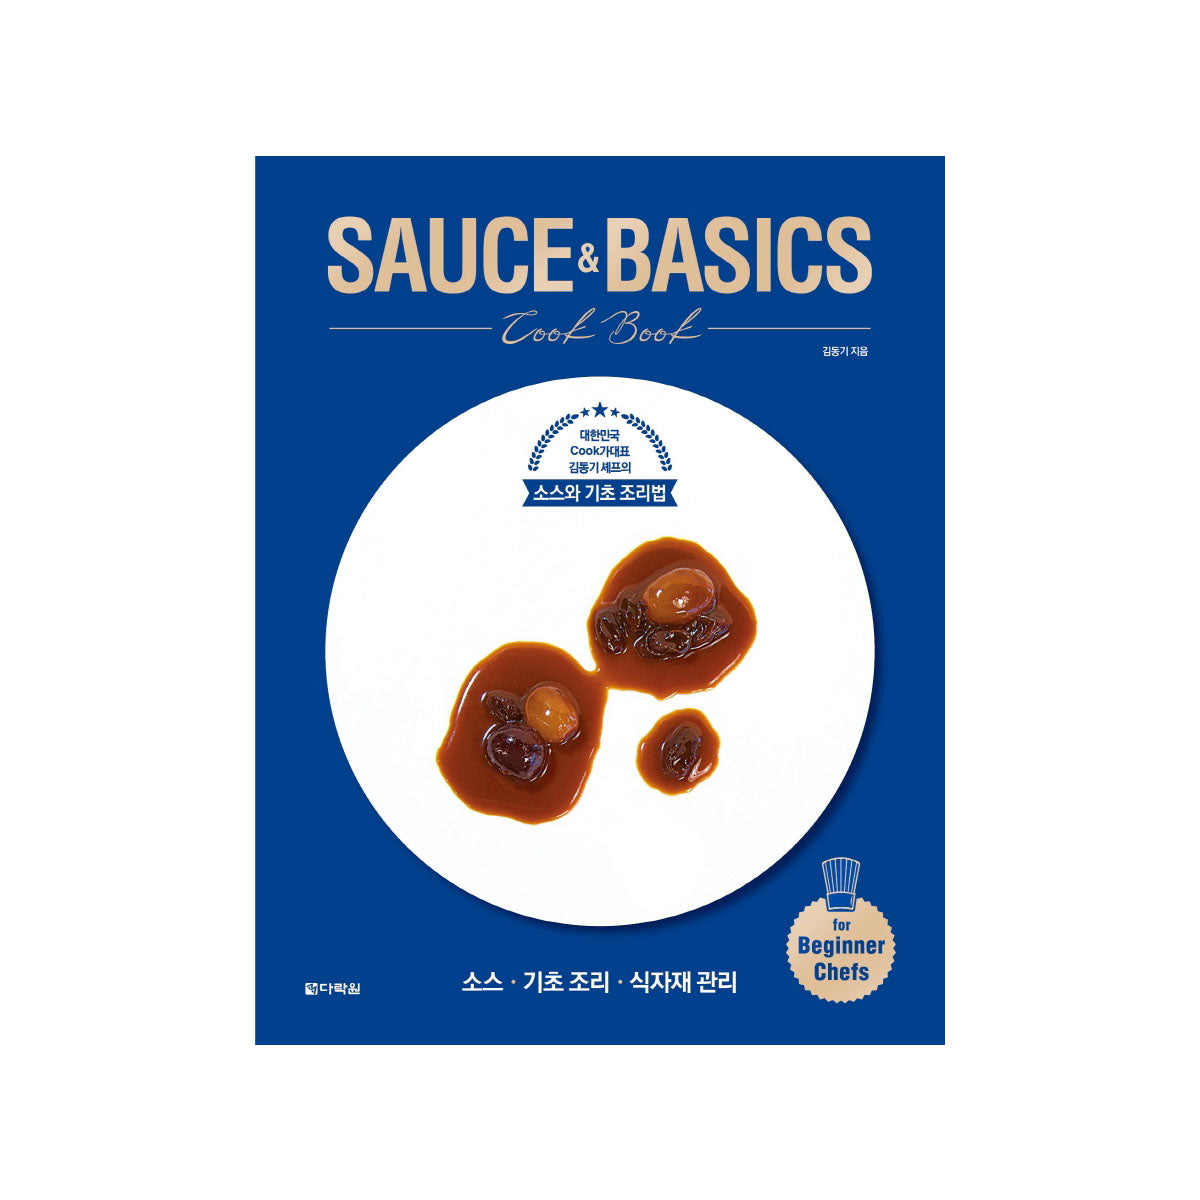 SAUCE & BASICS Cook Book for the beginners freeshipping - K-ZONE STUDIO